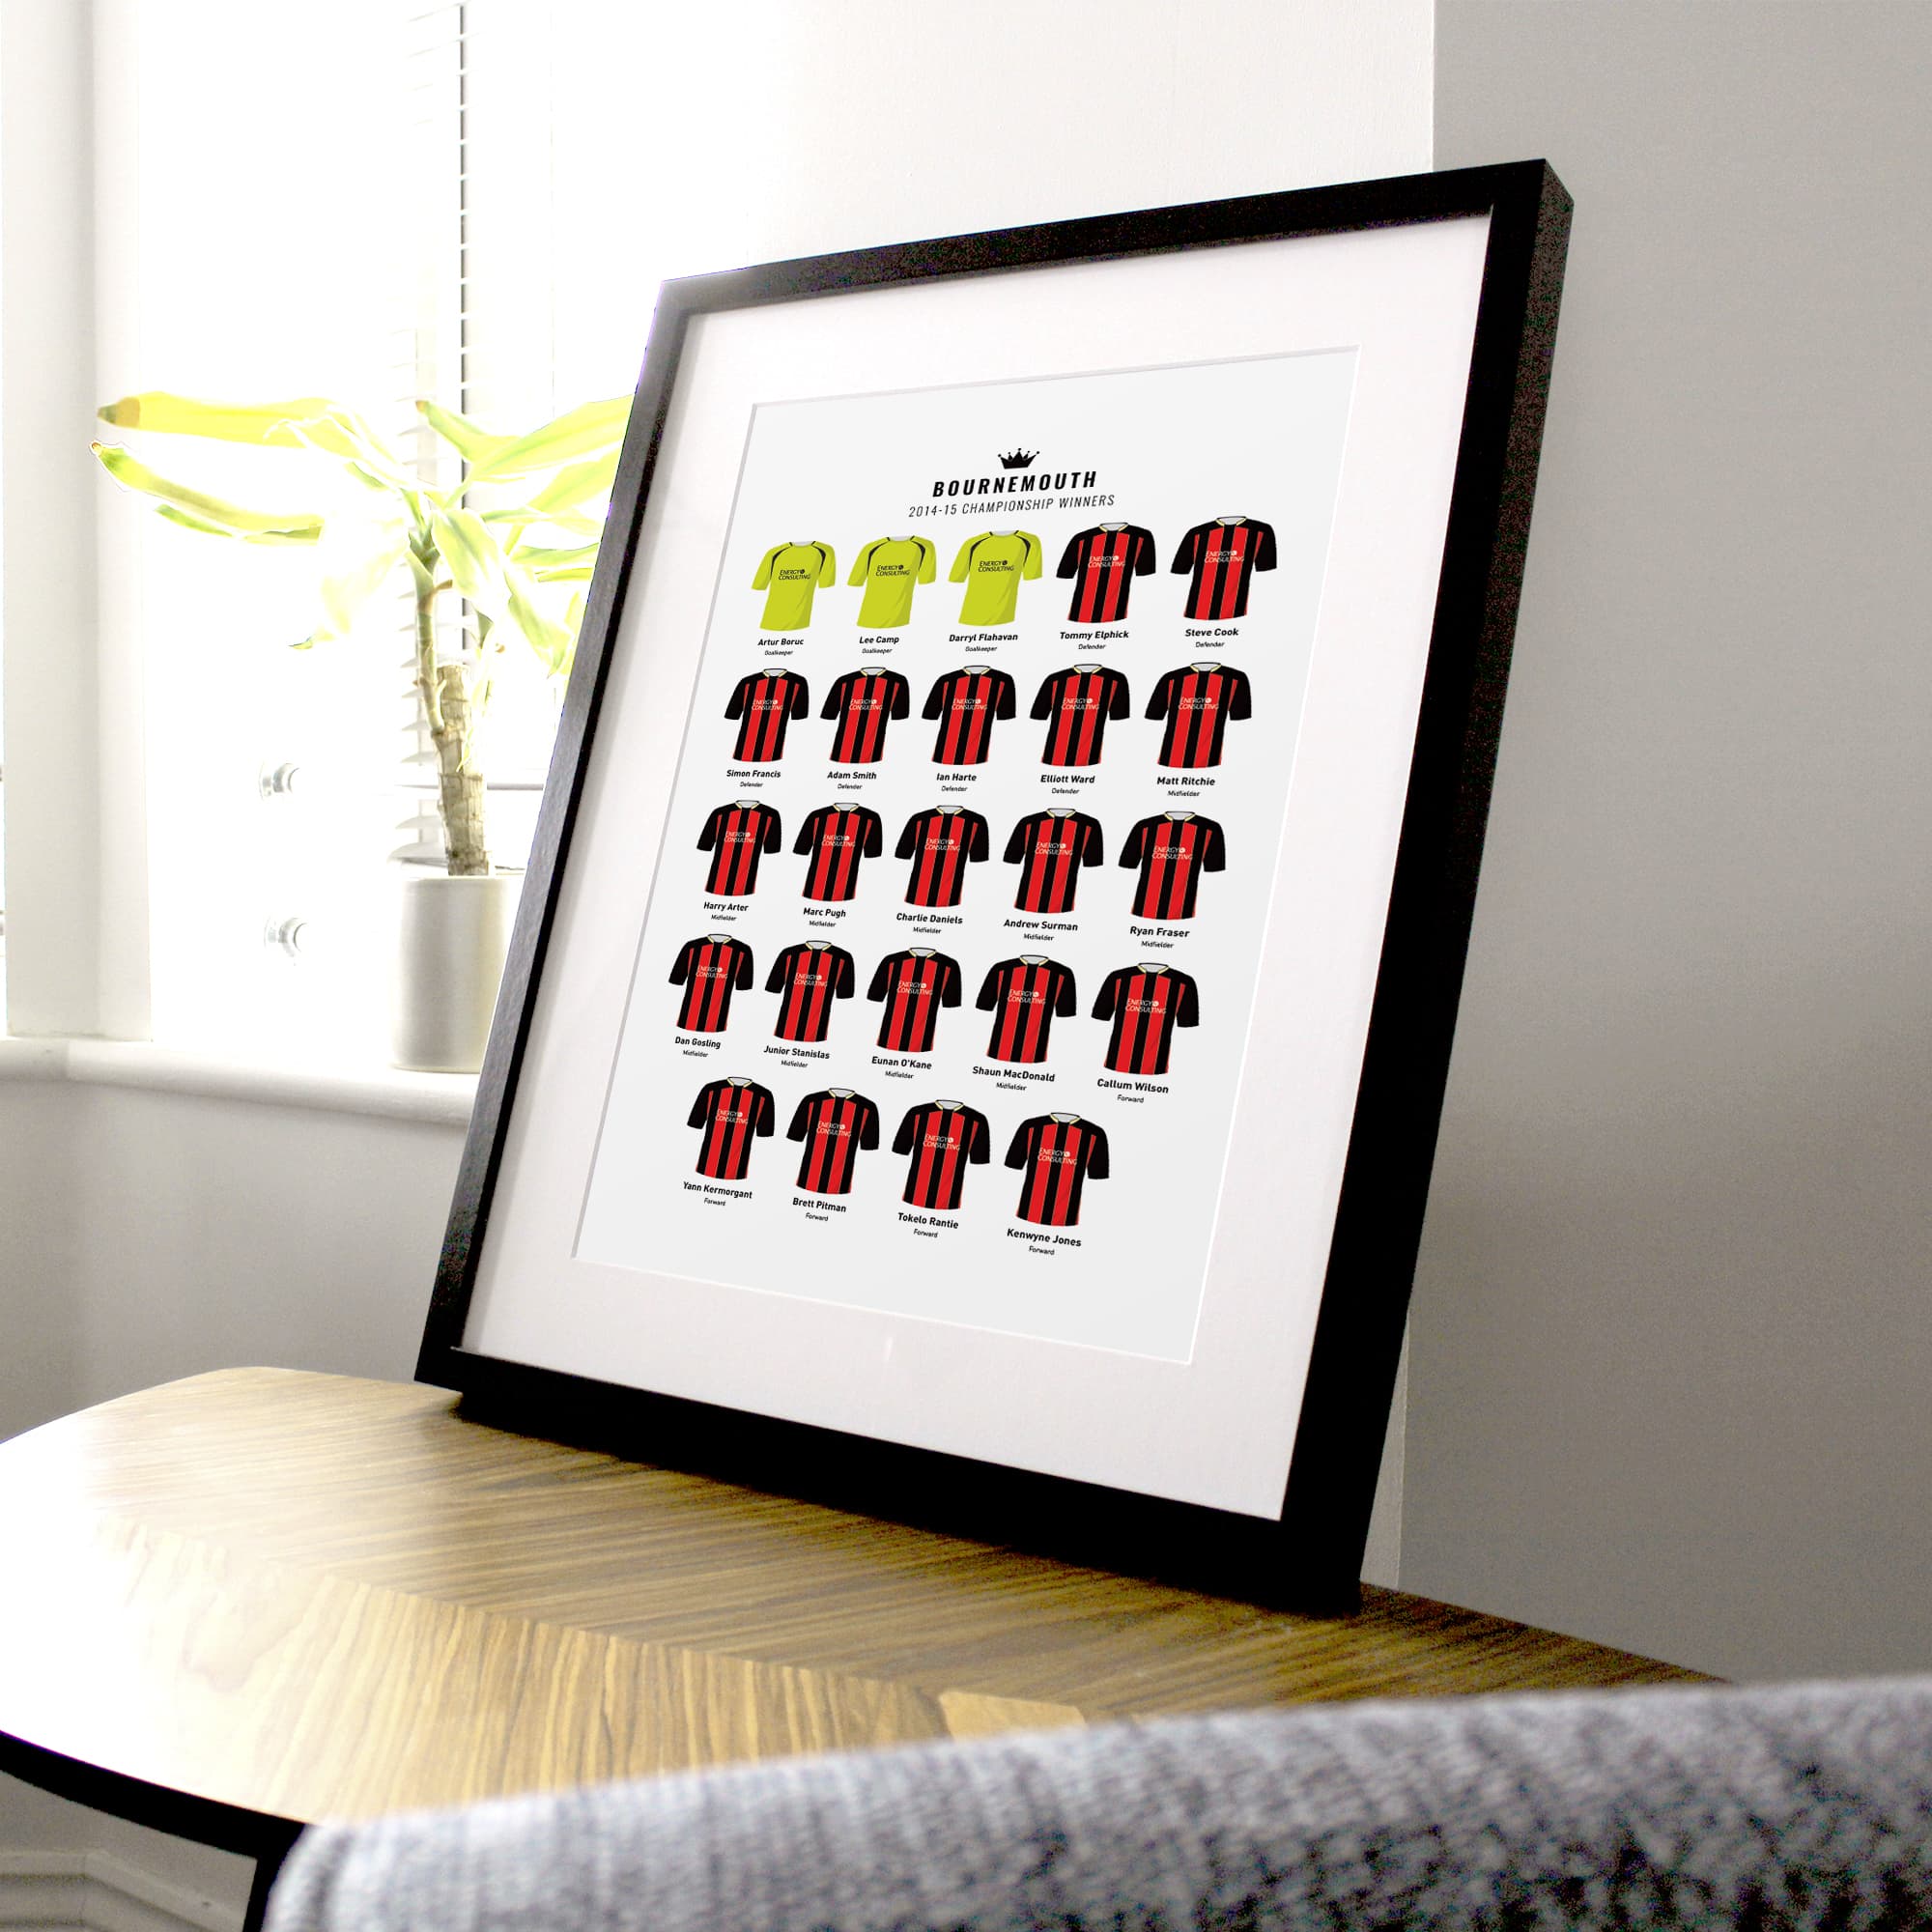 Bournemouth 2015 Championship Winners Football Team Print Good Team On Paper